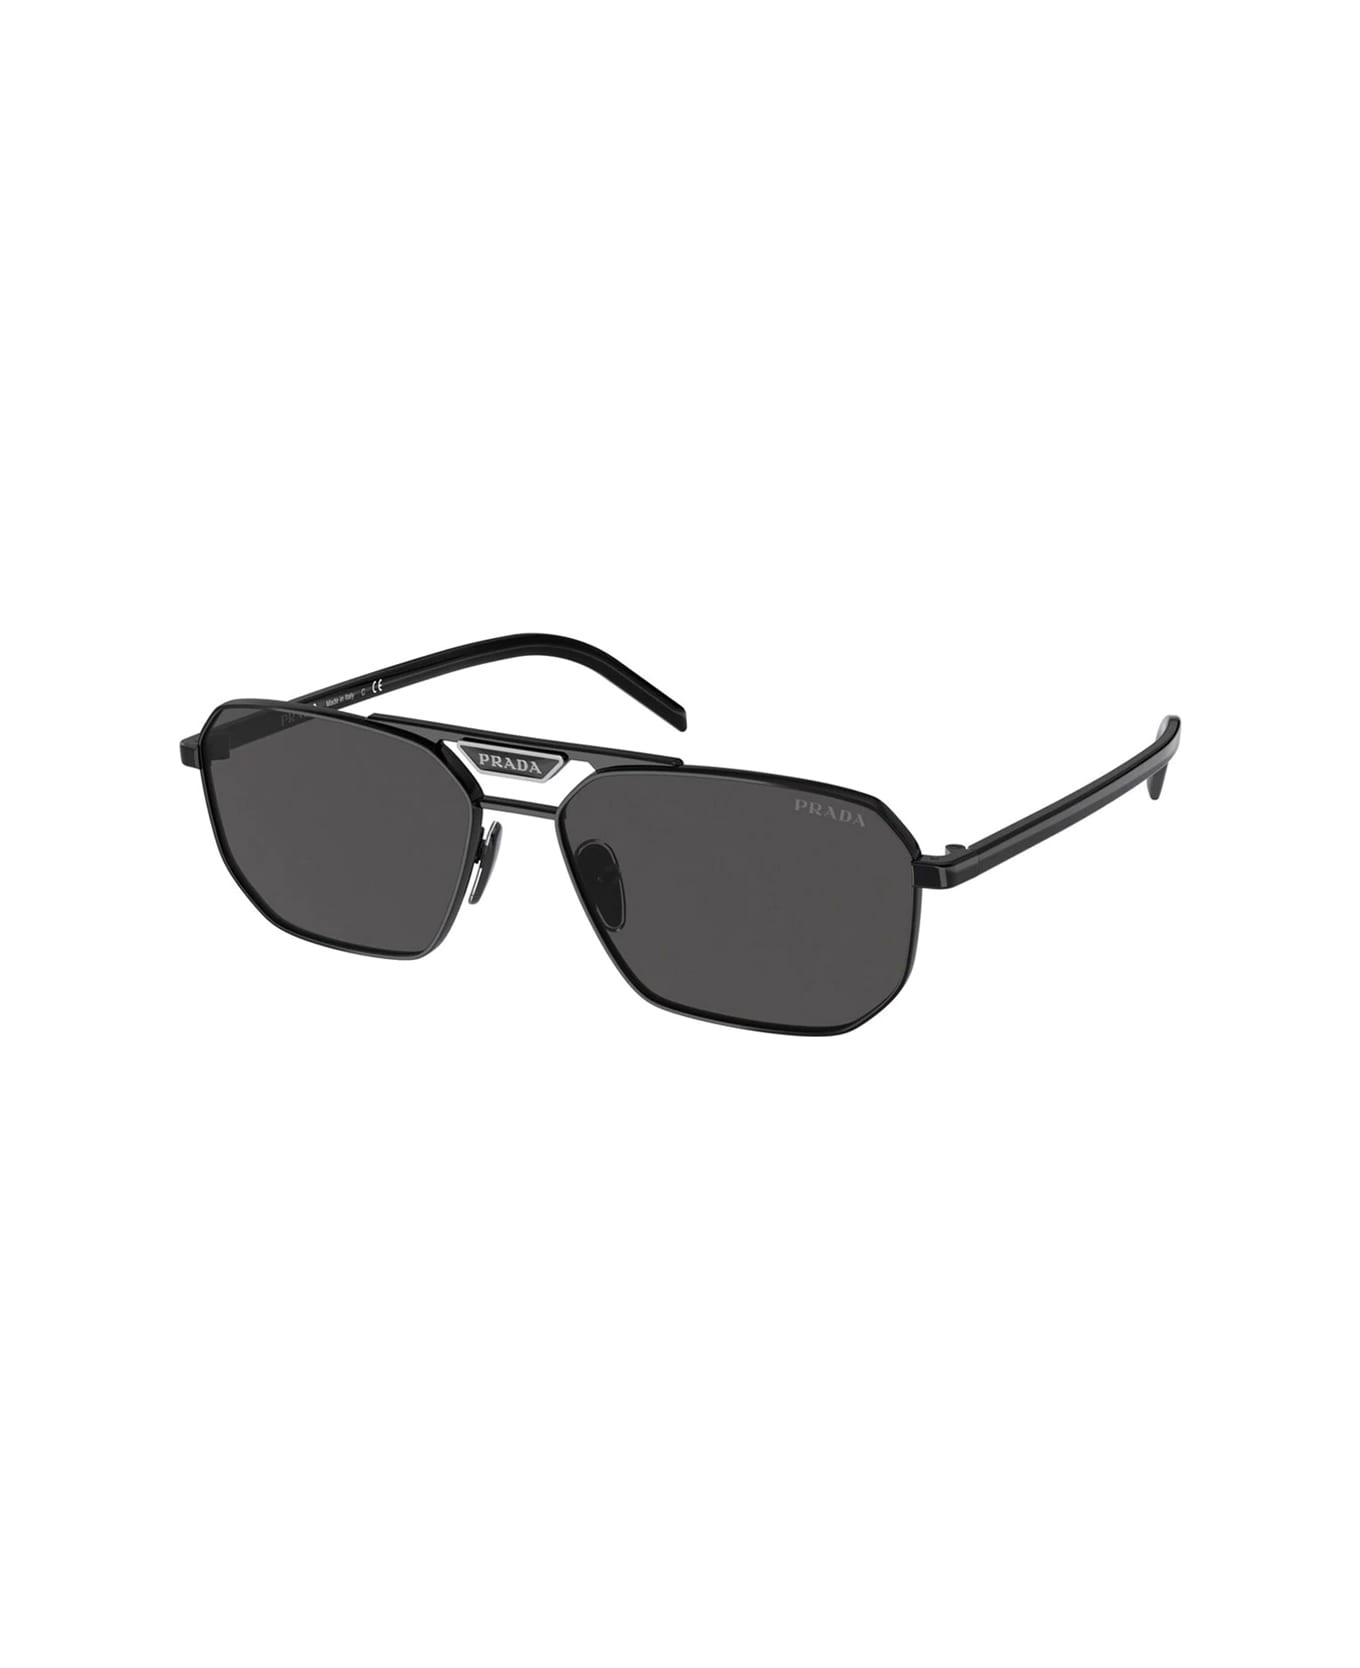 Prada Eyewear Pr 58ys 1ab5s0 Sunglasses - Nero サングラス